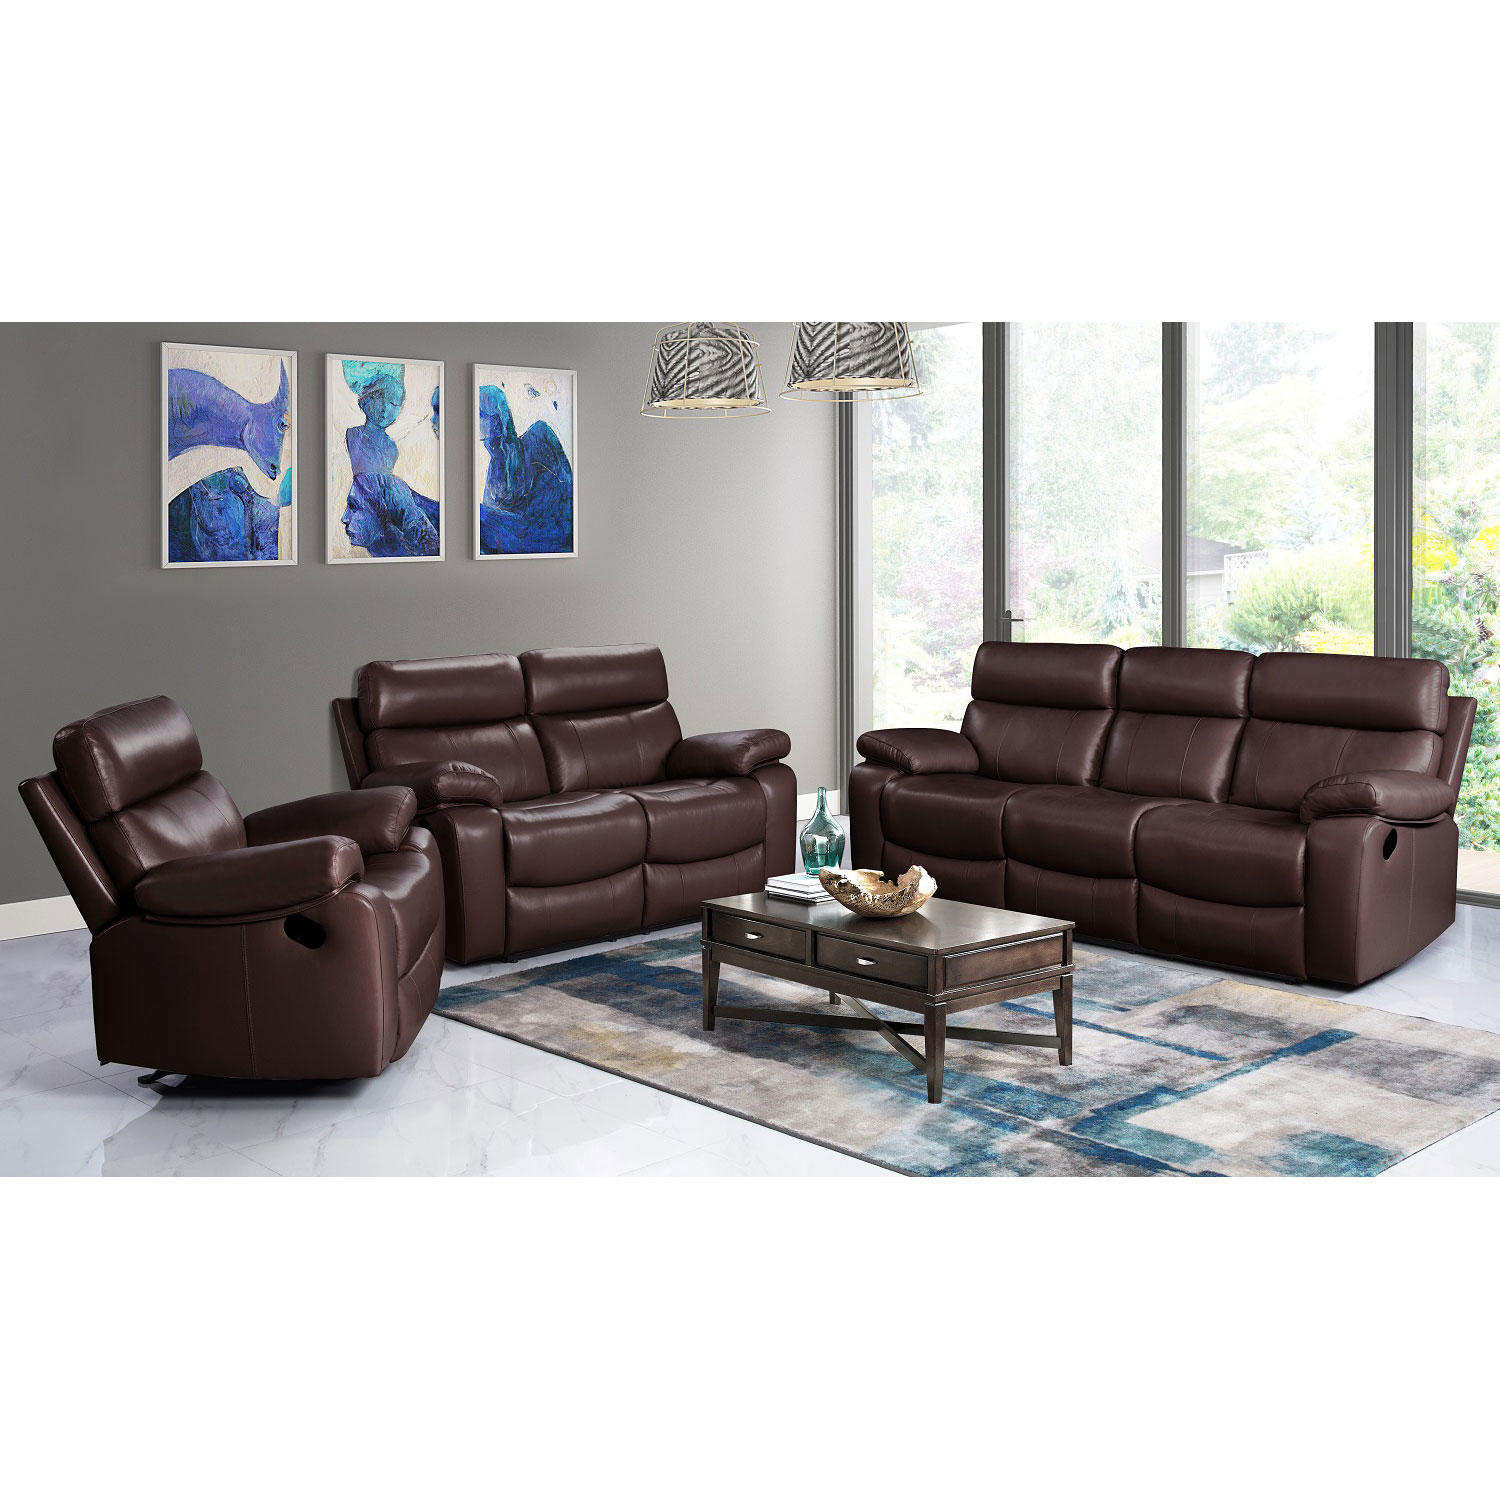 Strafford TopGrain Leather 3 Piece Reclining Sofa Set